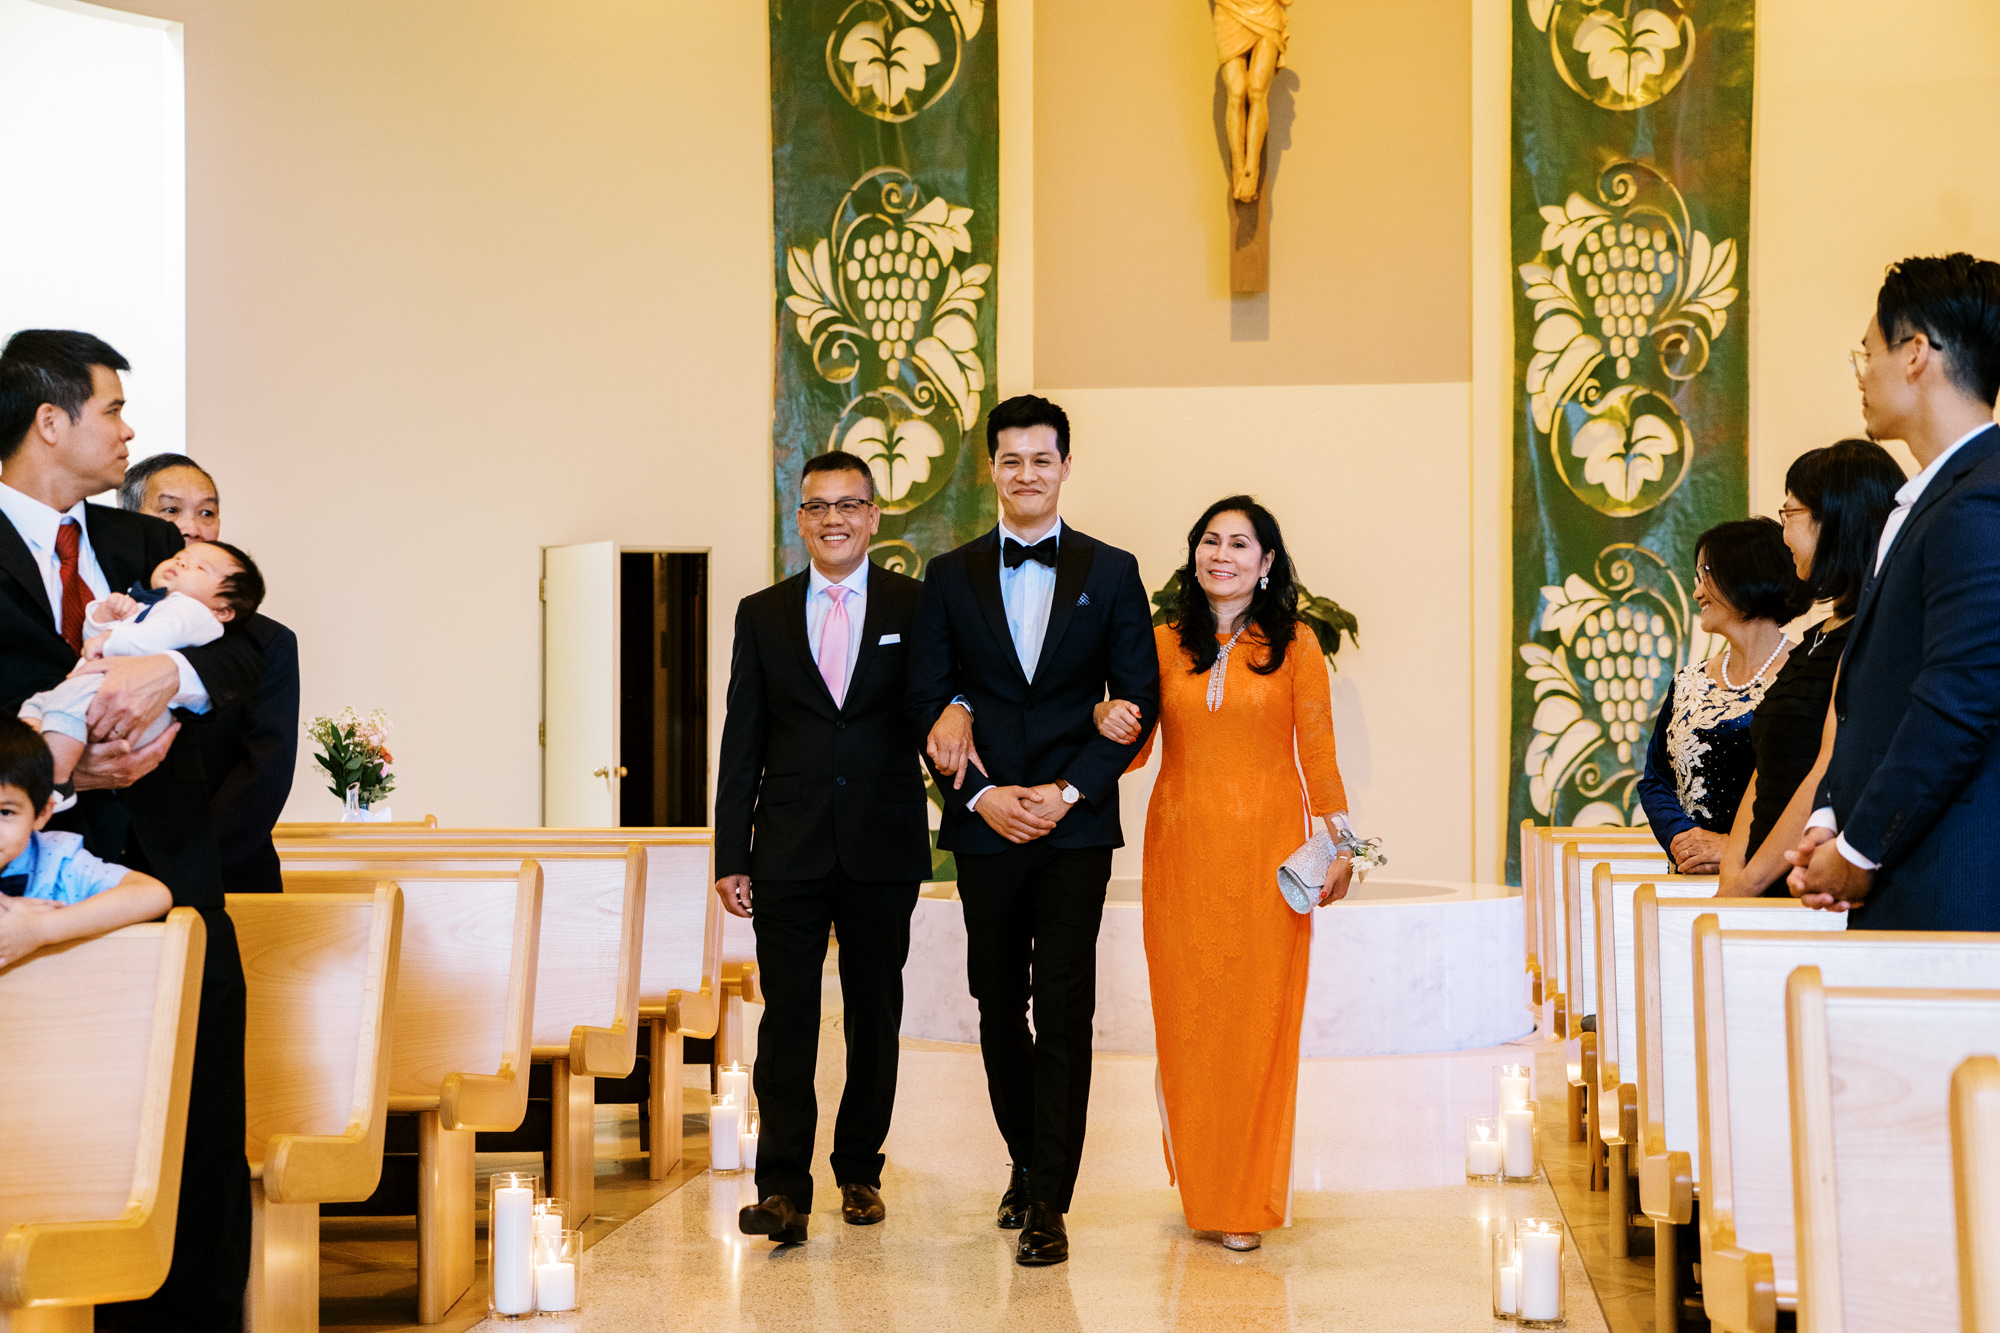 St Anne's Catholic Church wedding: Groom John walks down the aisle with parents